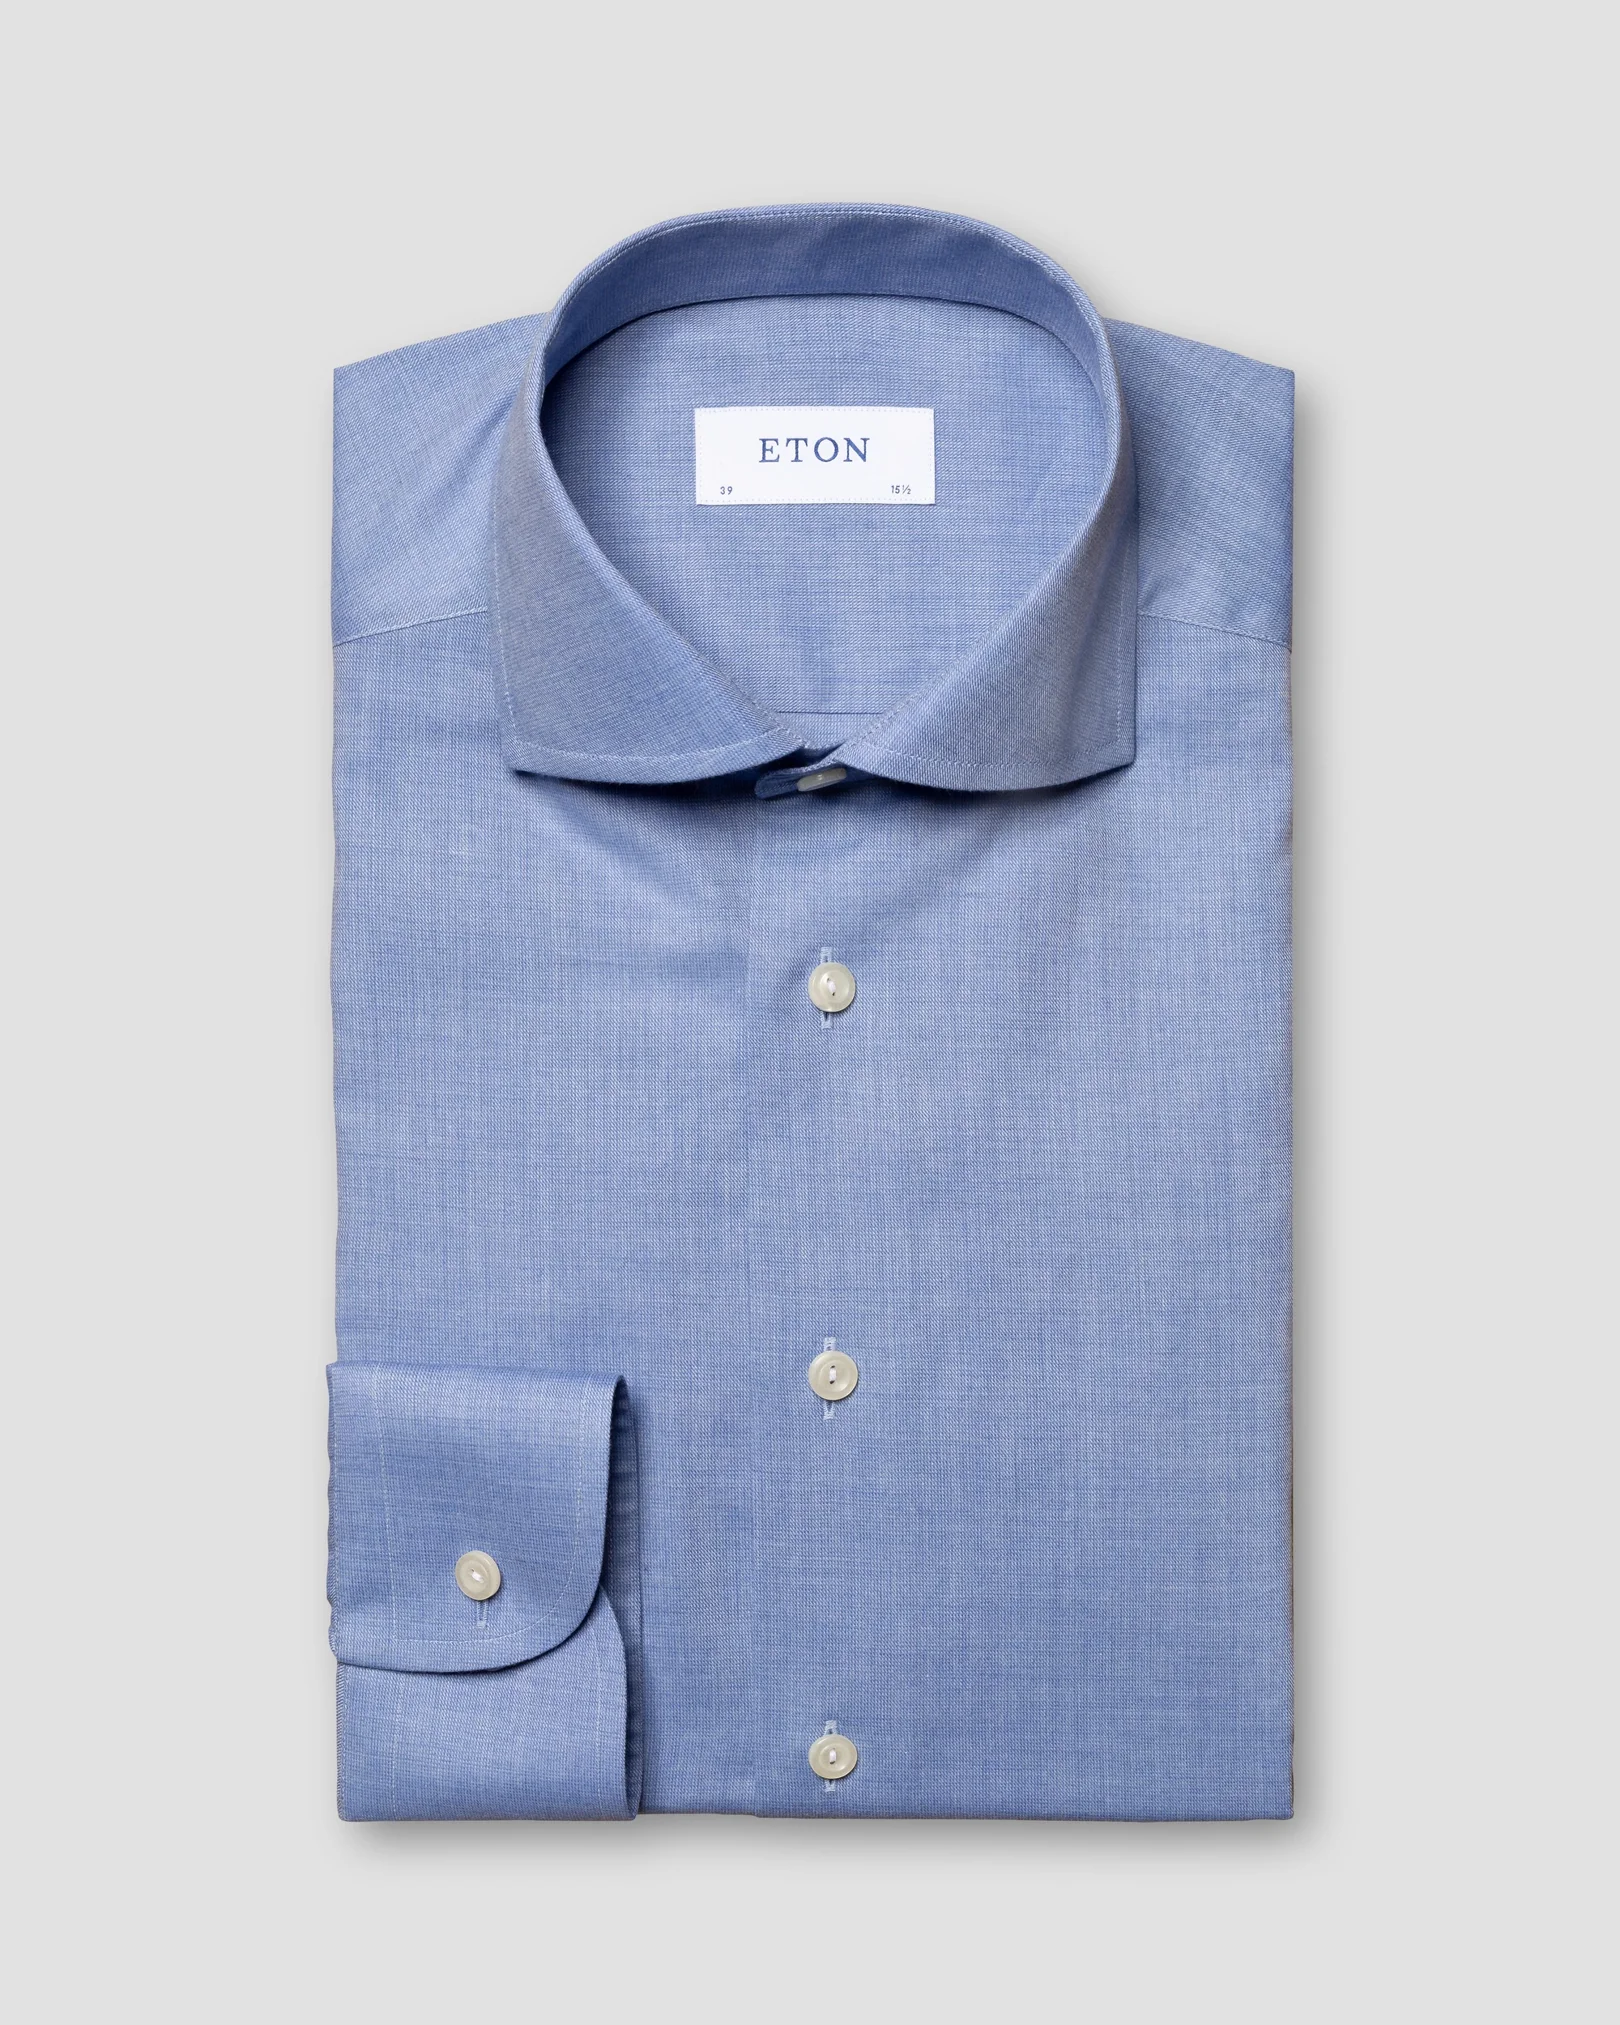 Eton - blue flannel shirt